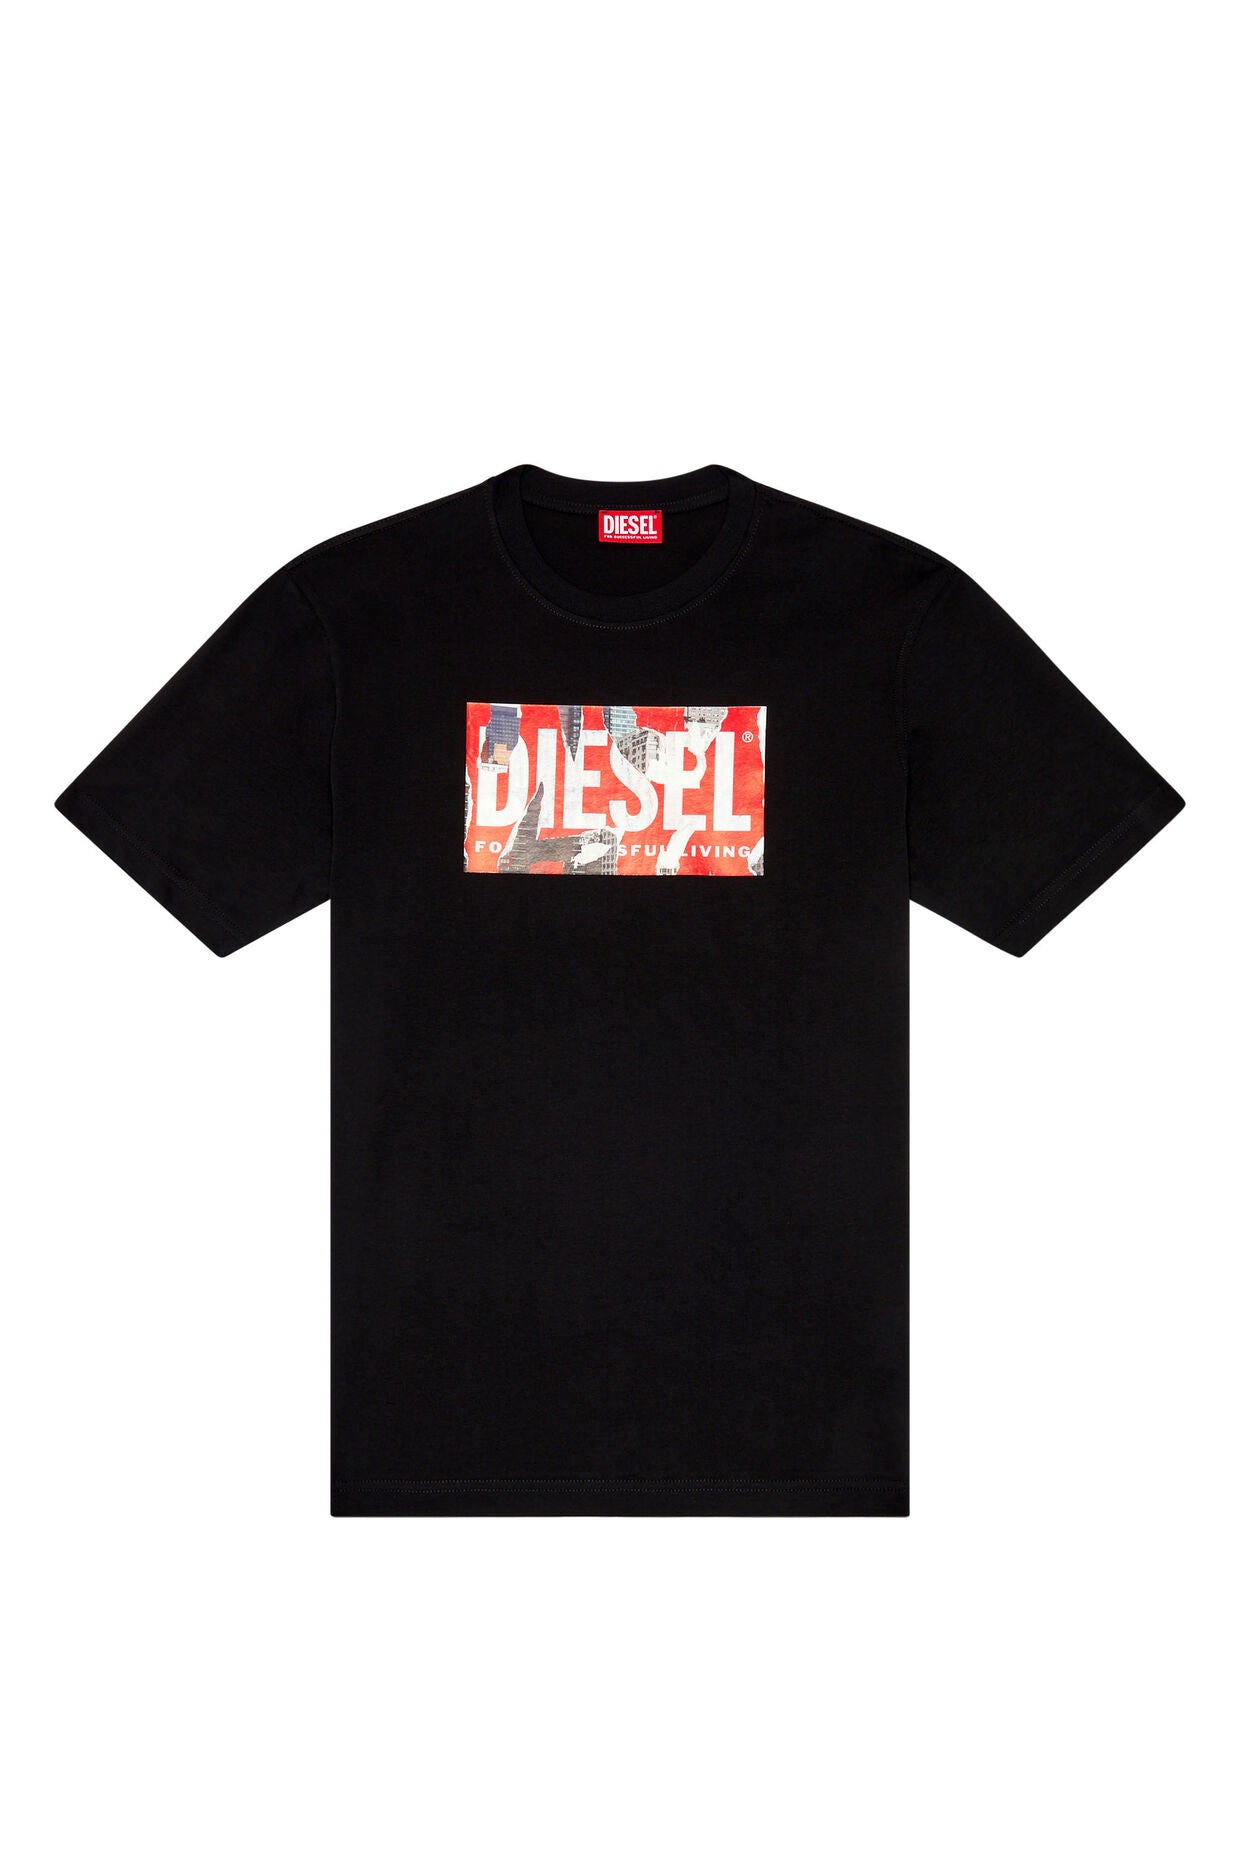 Diesel uomo t-shirt t-just l13 12529-0CATMI23